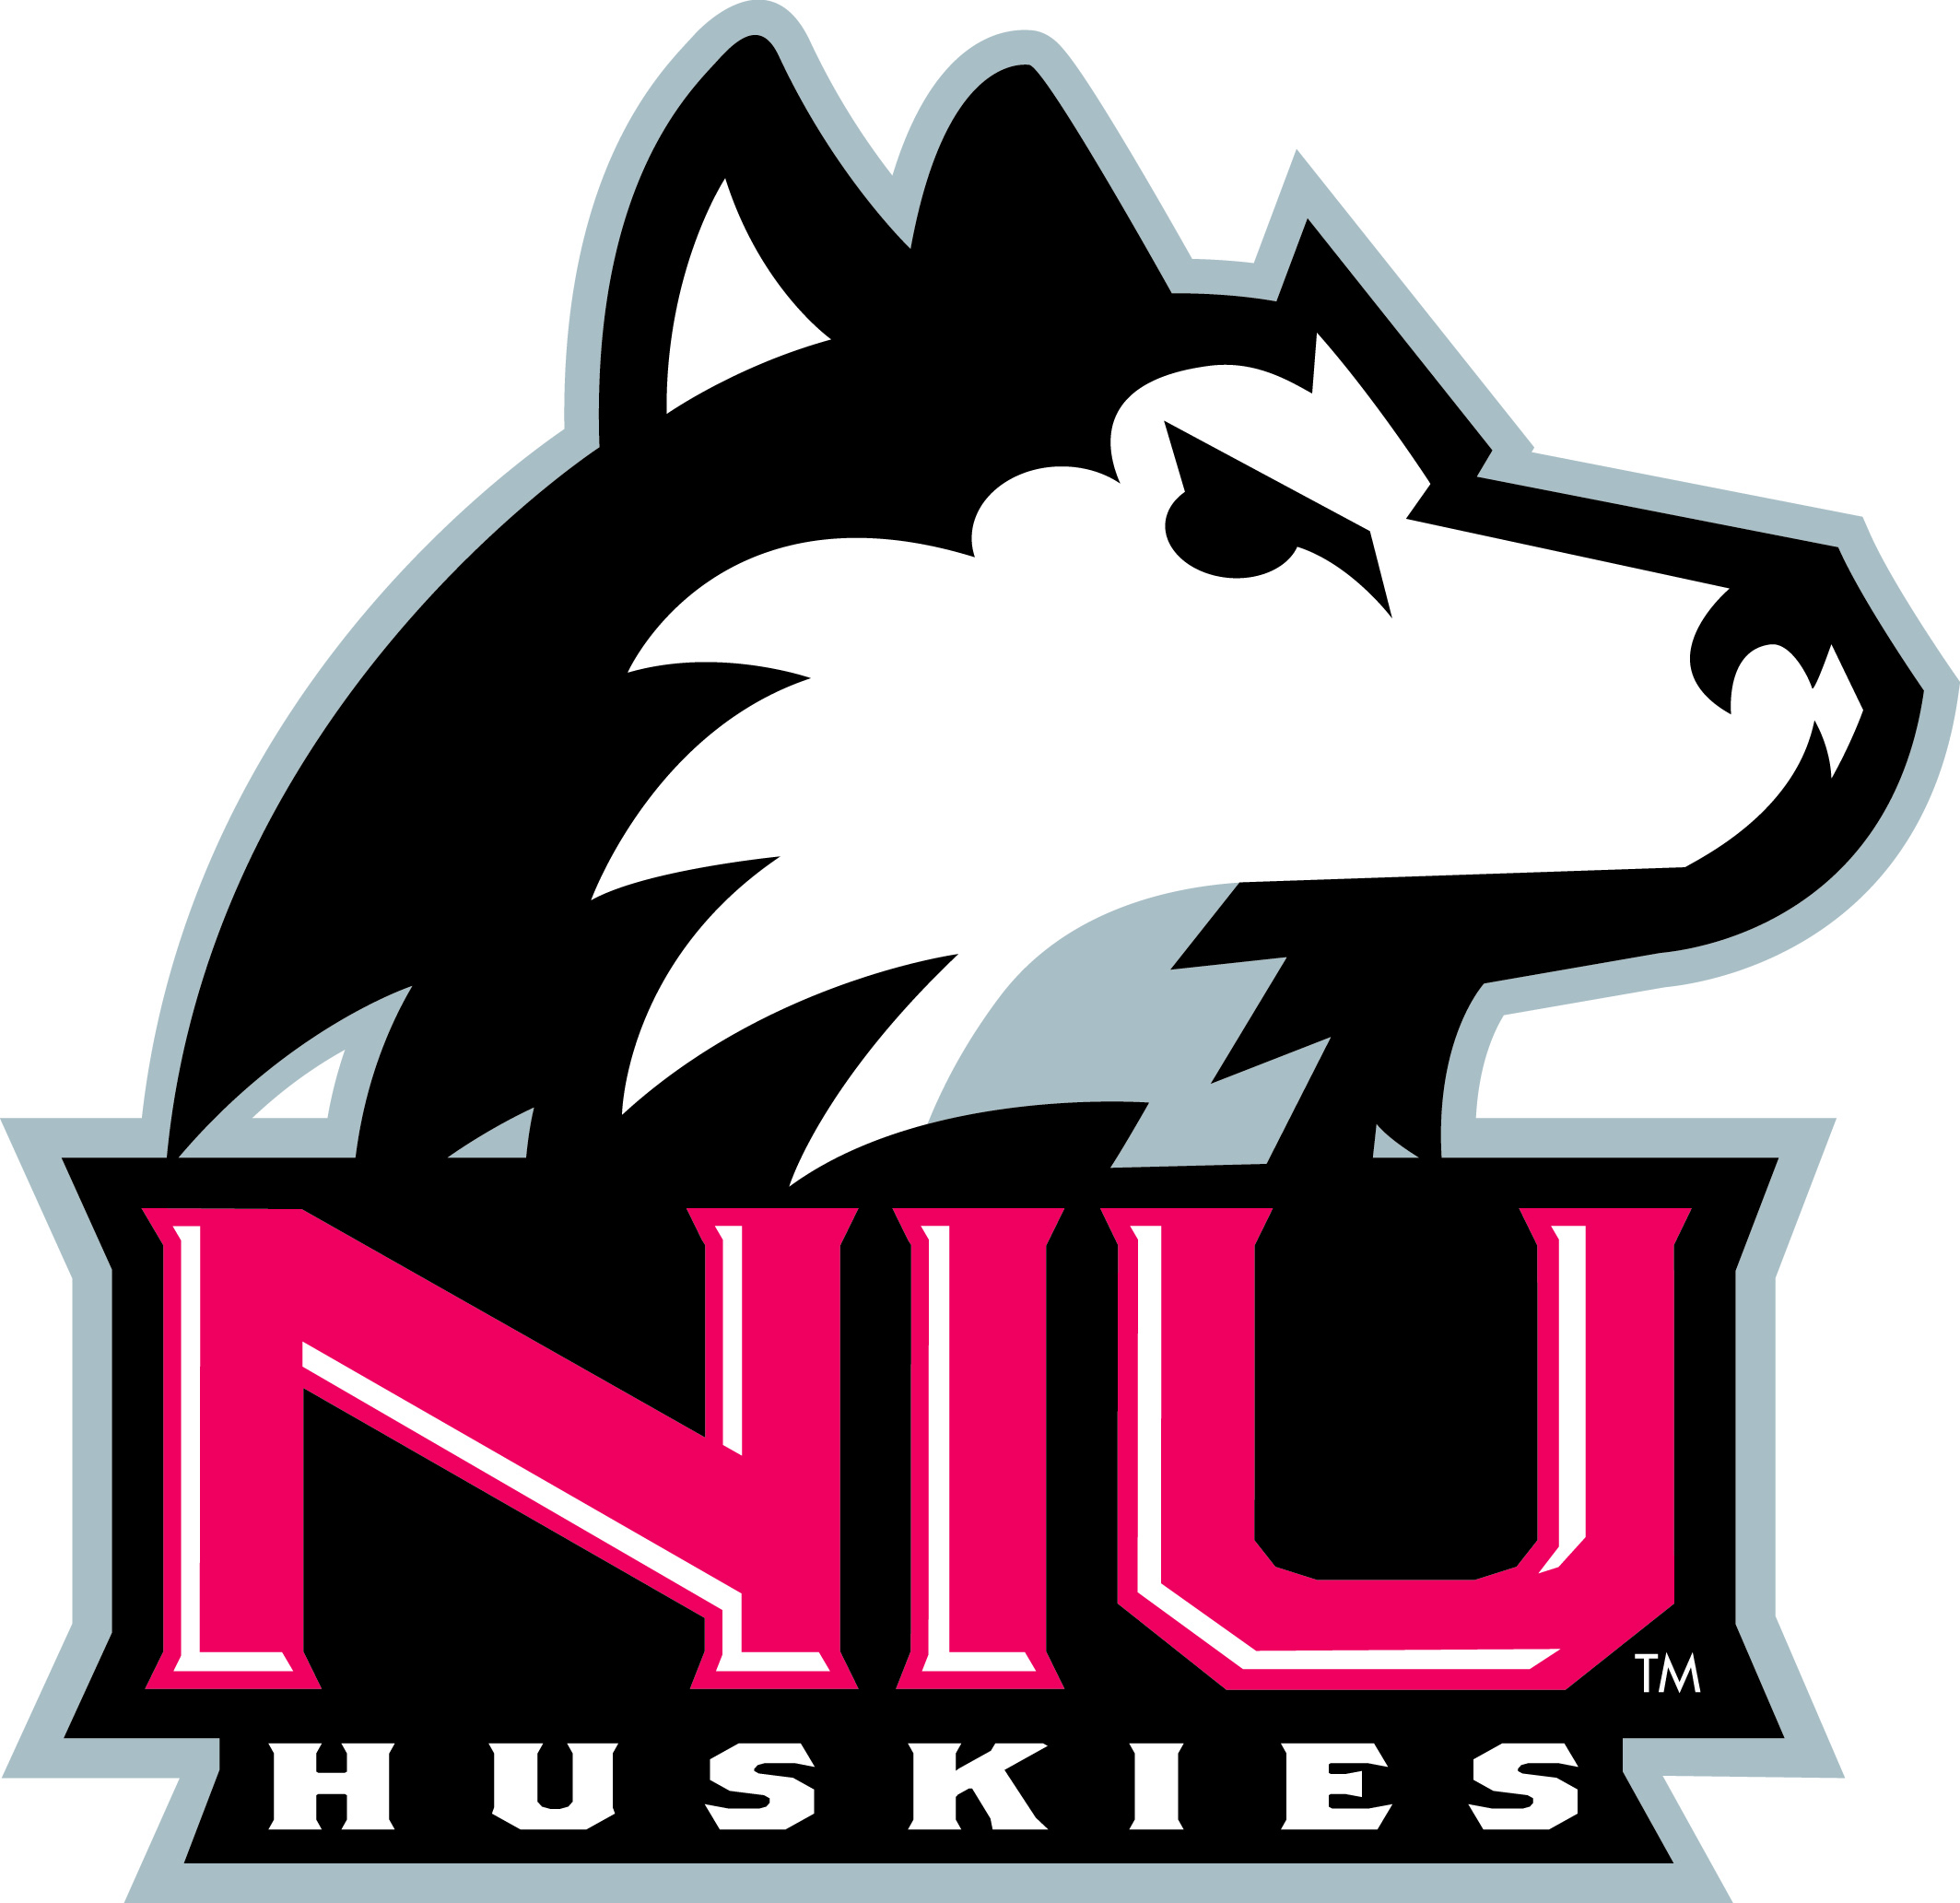 Gray and white wolf logo representing Northern Illinois University athletics, also known as NIU Huskies